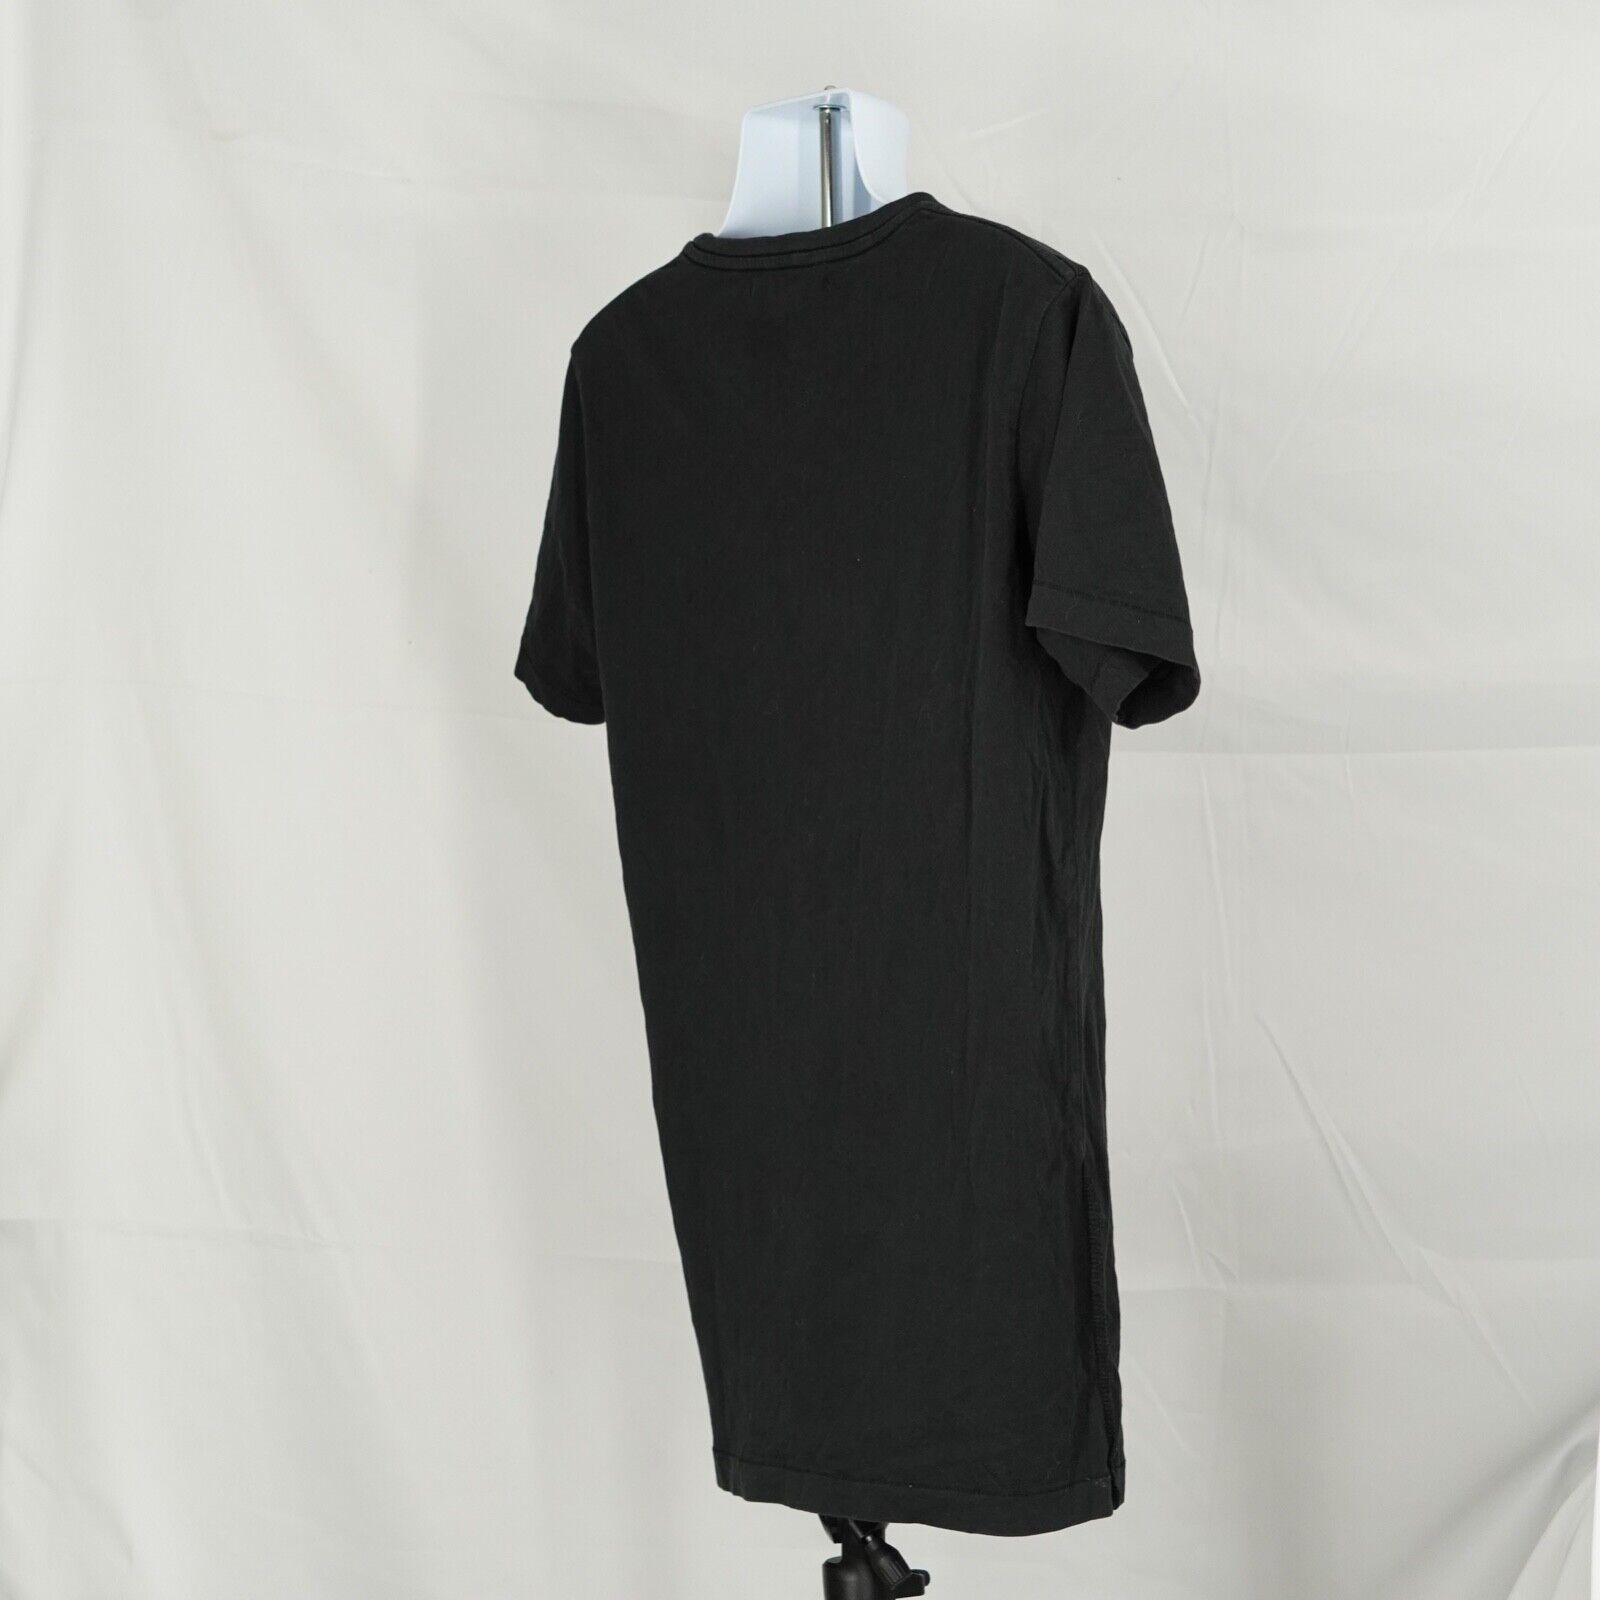 Tsubi Black Cross Graphic T Shirt - 8